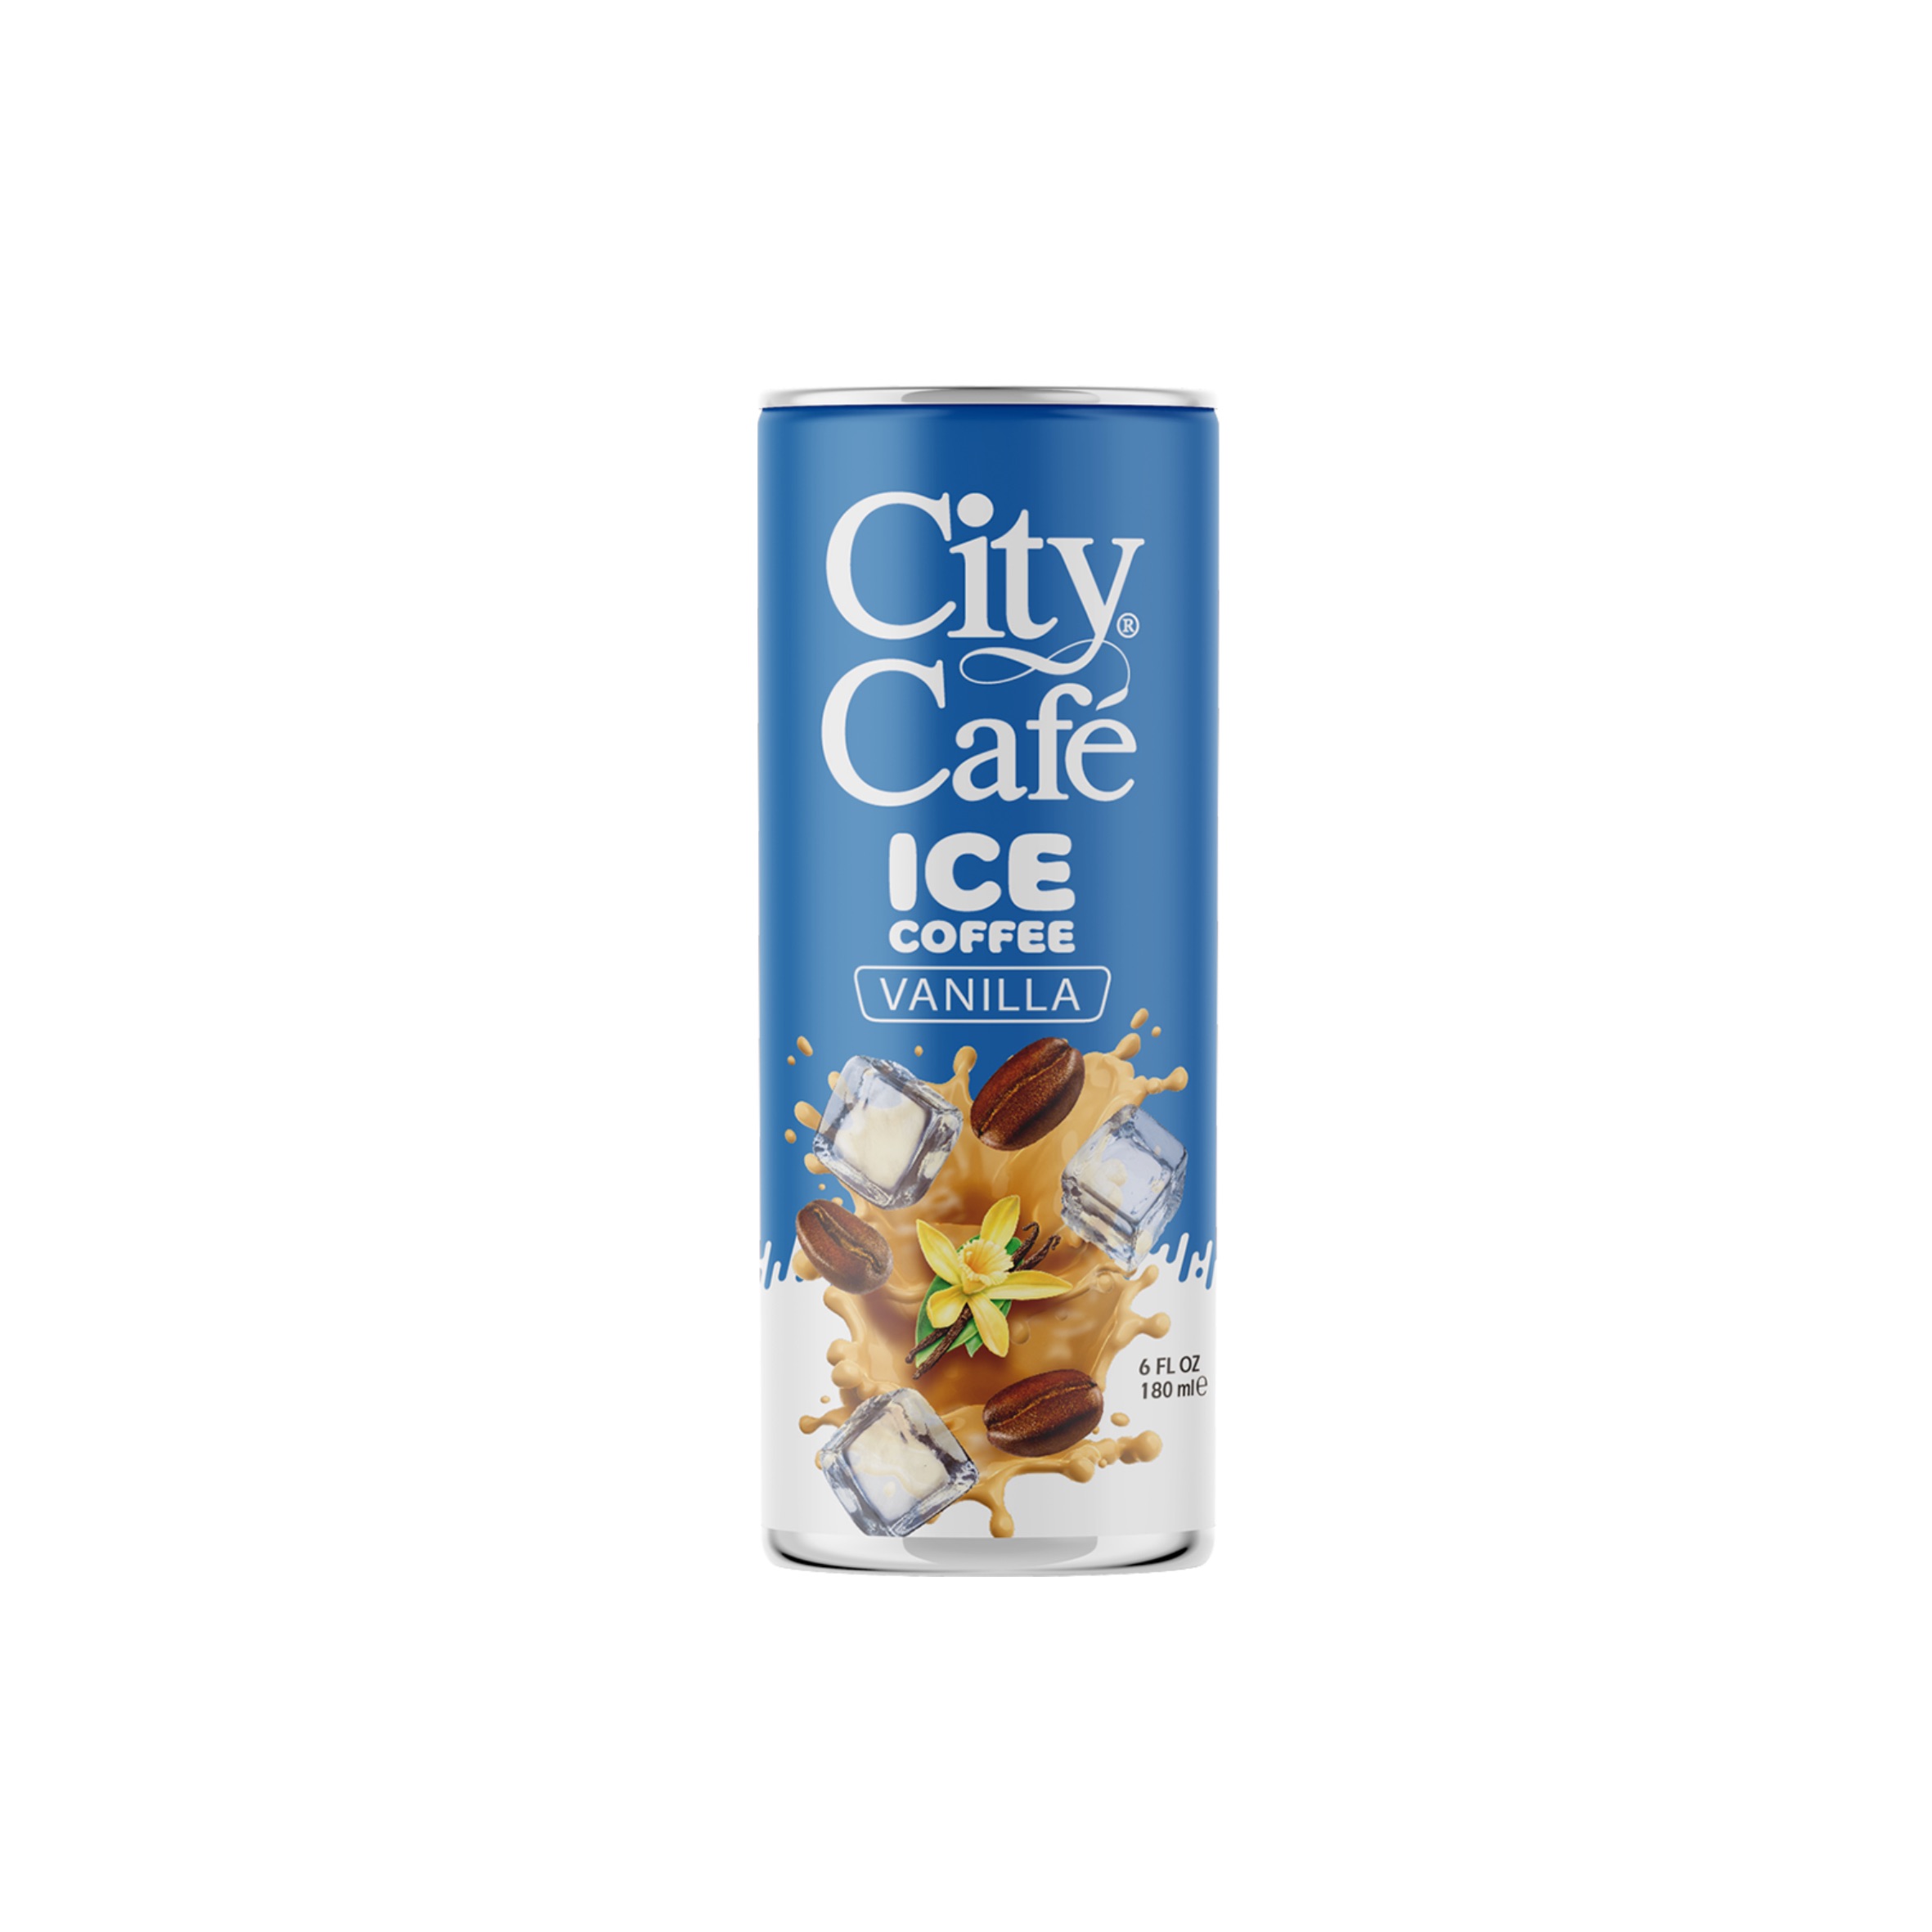 City café Ice Coffee - Vanilla